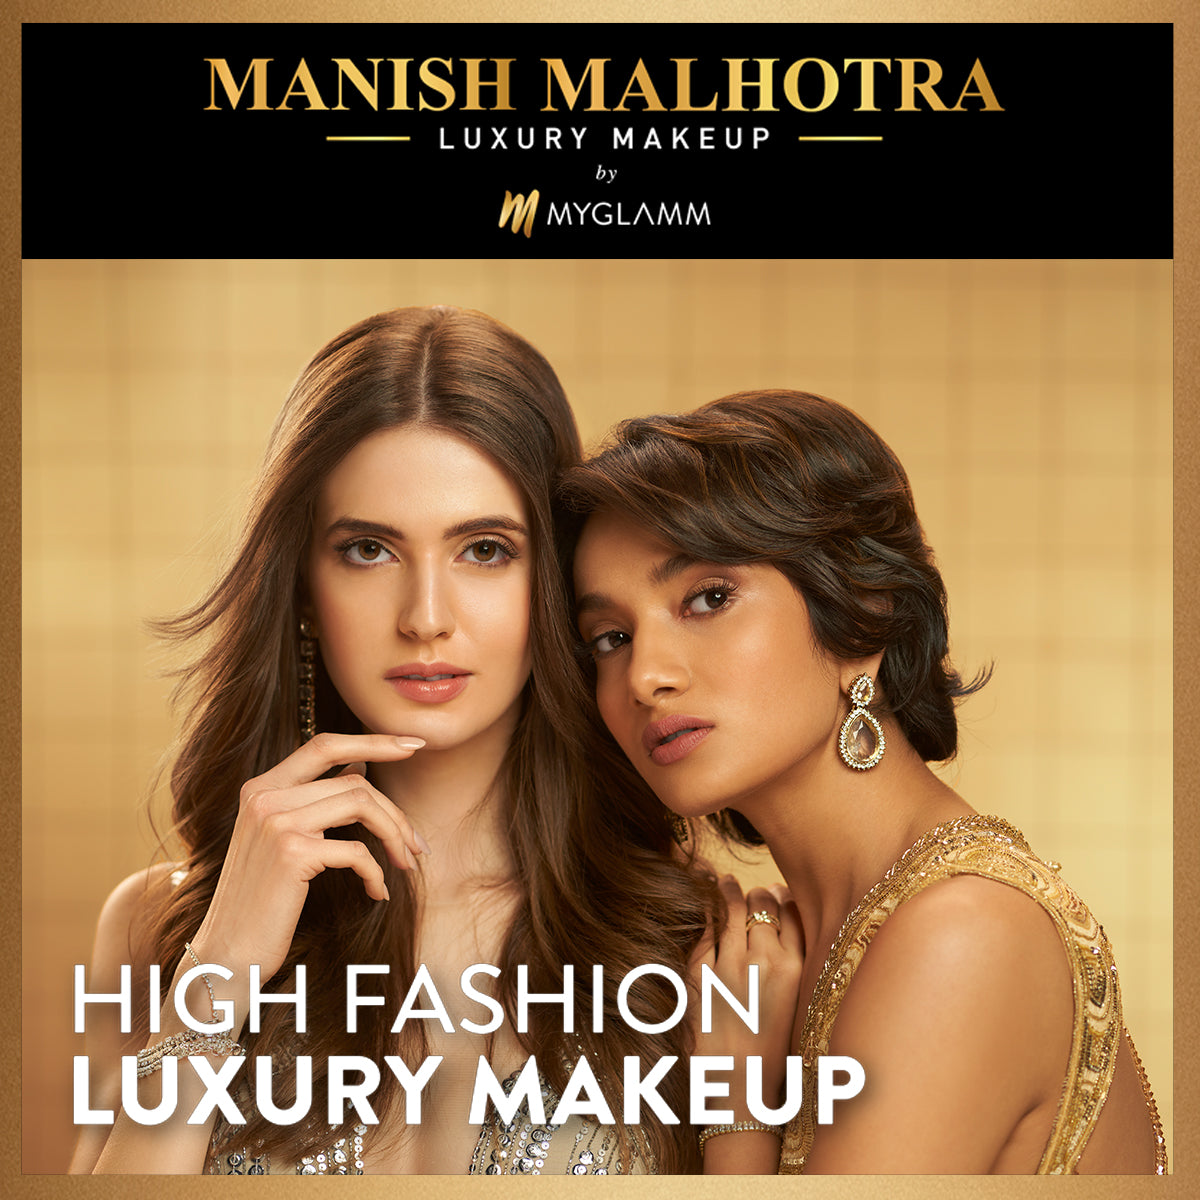 MyGlamm Manish Malhotra Beauty Luminious Moisturising Primer --28ml